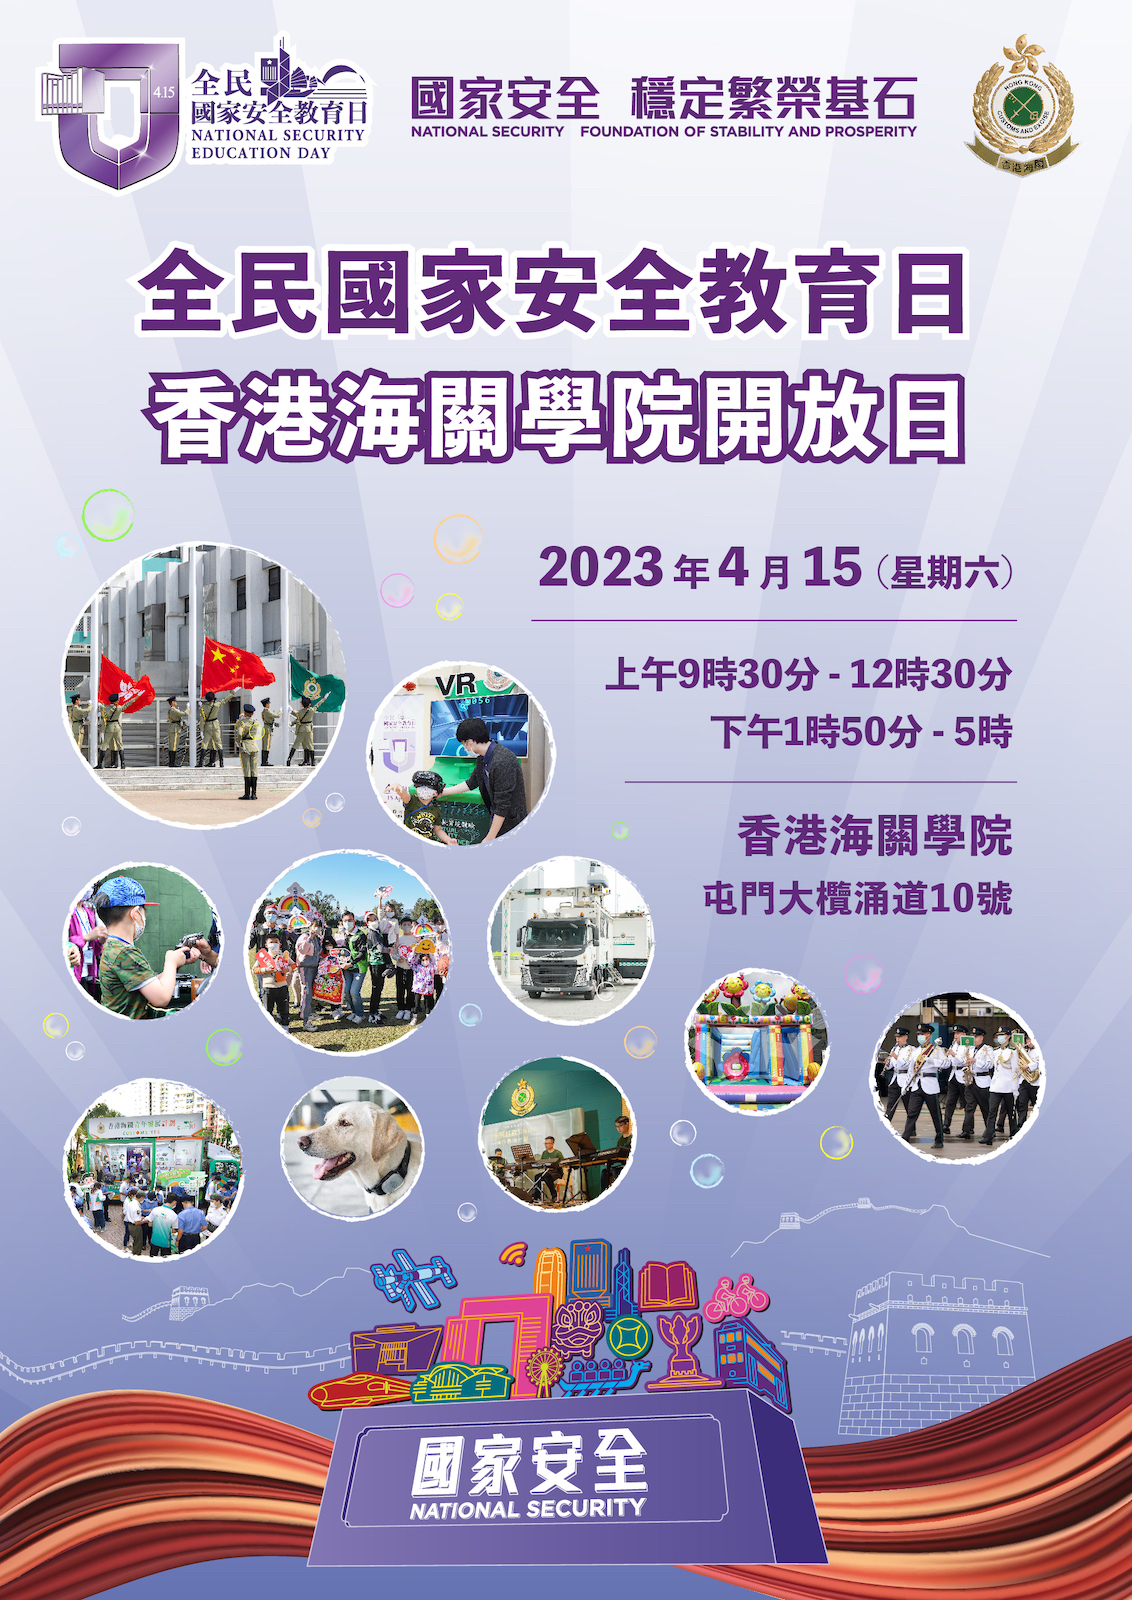 Hong Kong Customs College